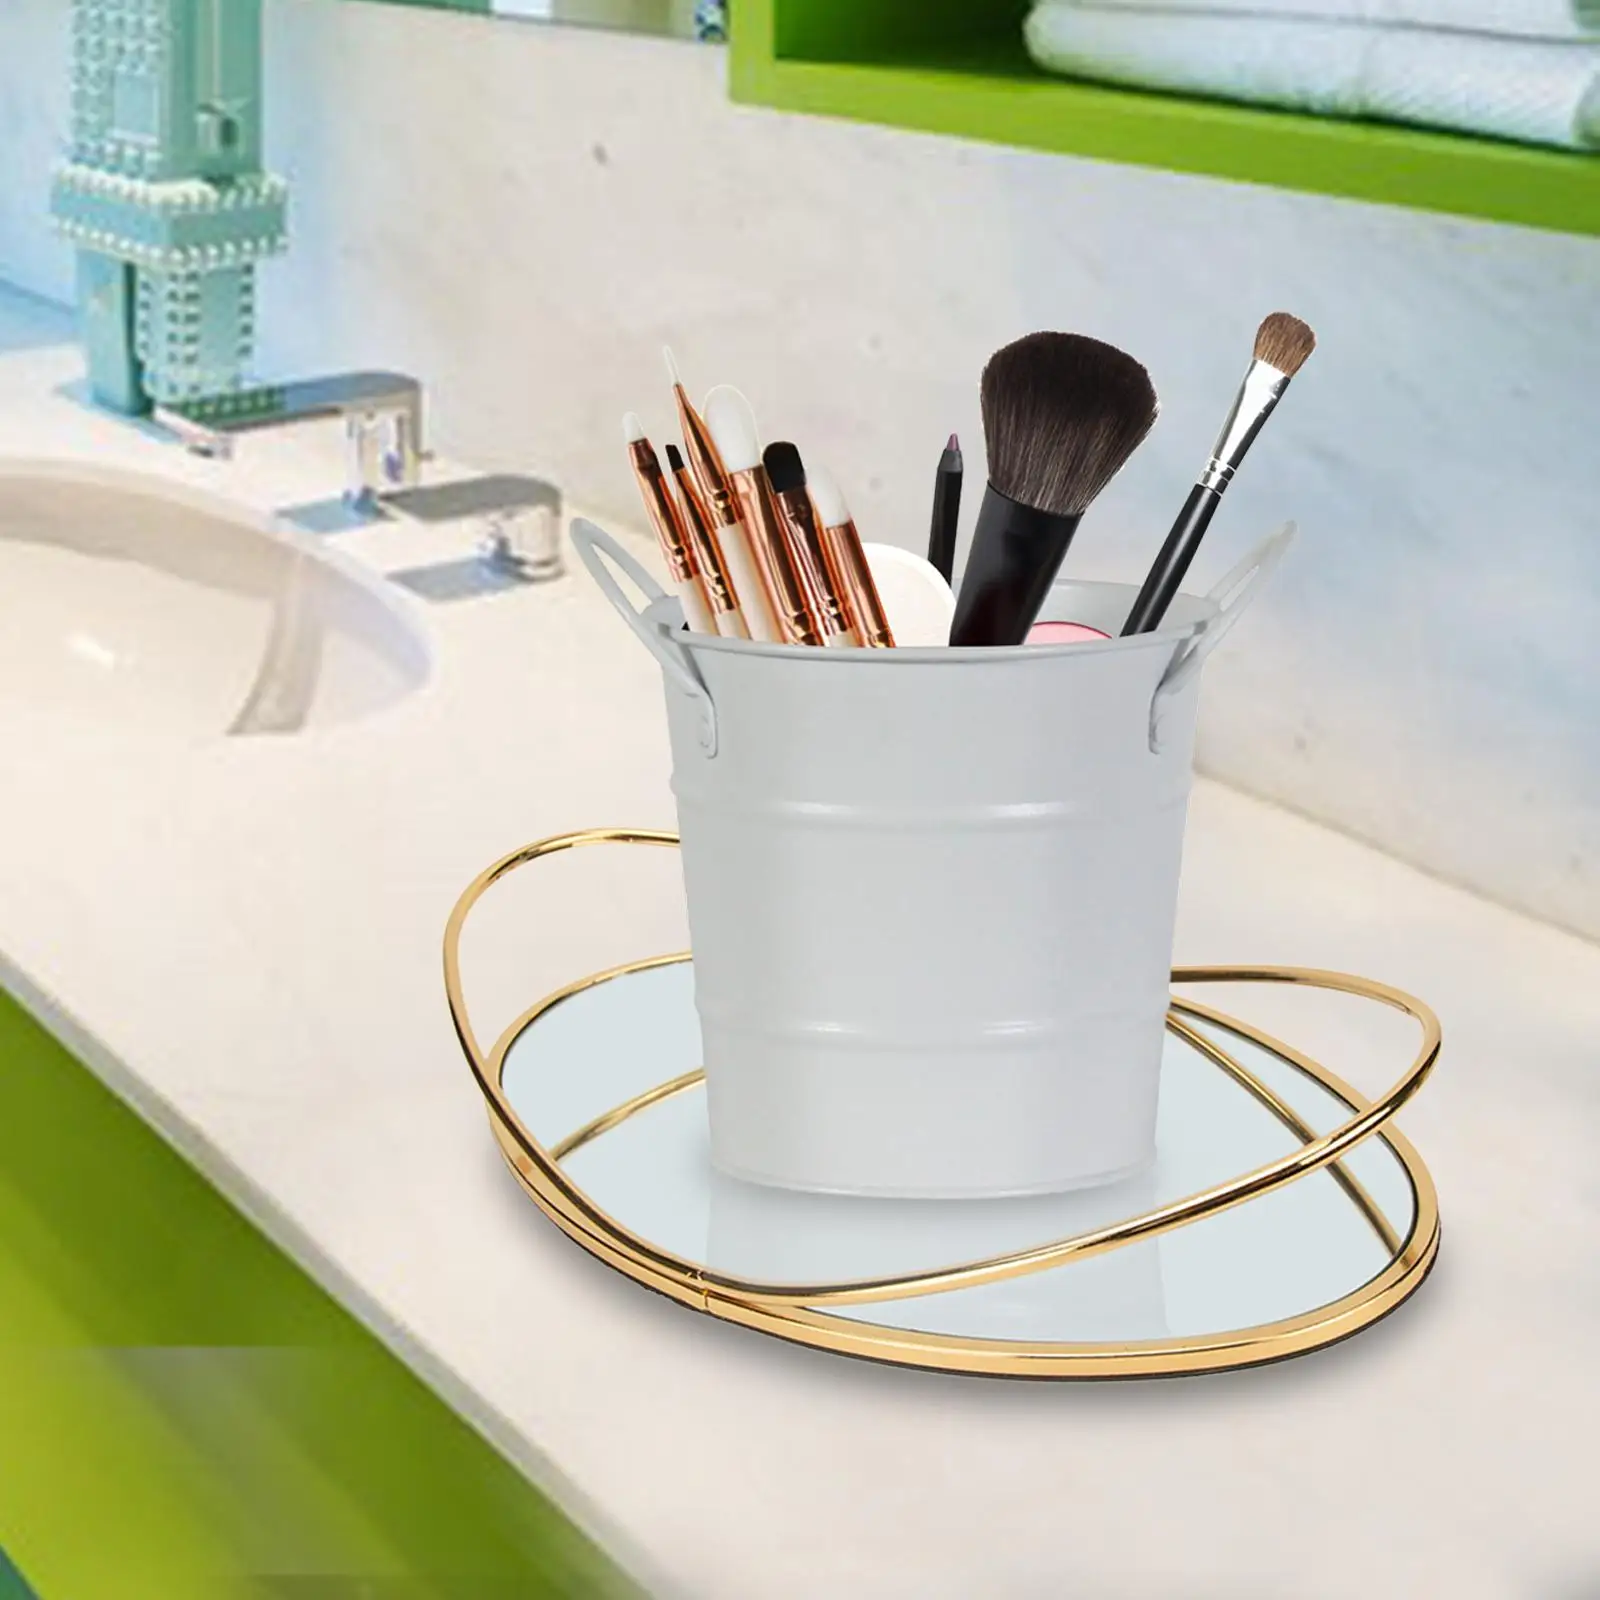 Mirror Vanity Tray Serving Tray with Handle Bathroom Organizer Tea Light Holders Decorative for Dresser Bedroom Bathroom Vanity